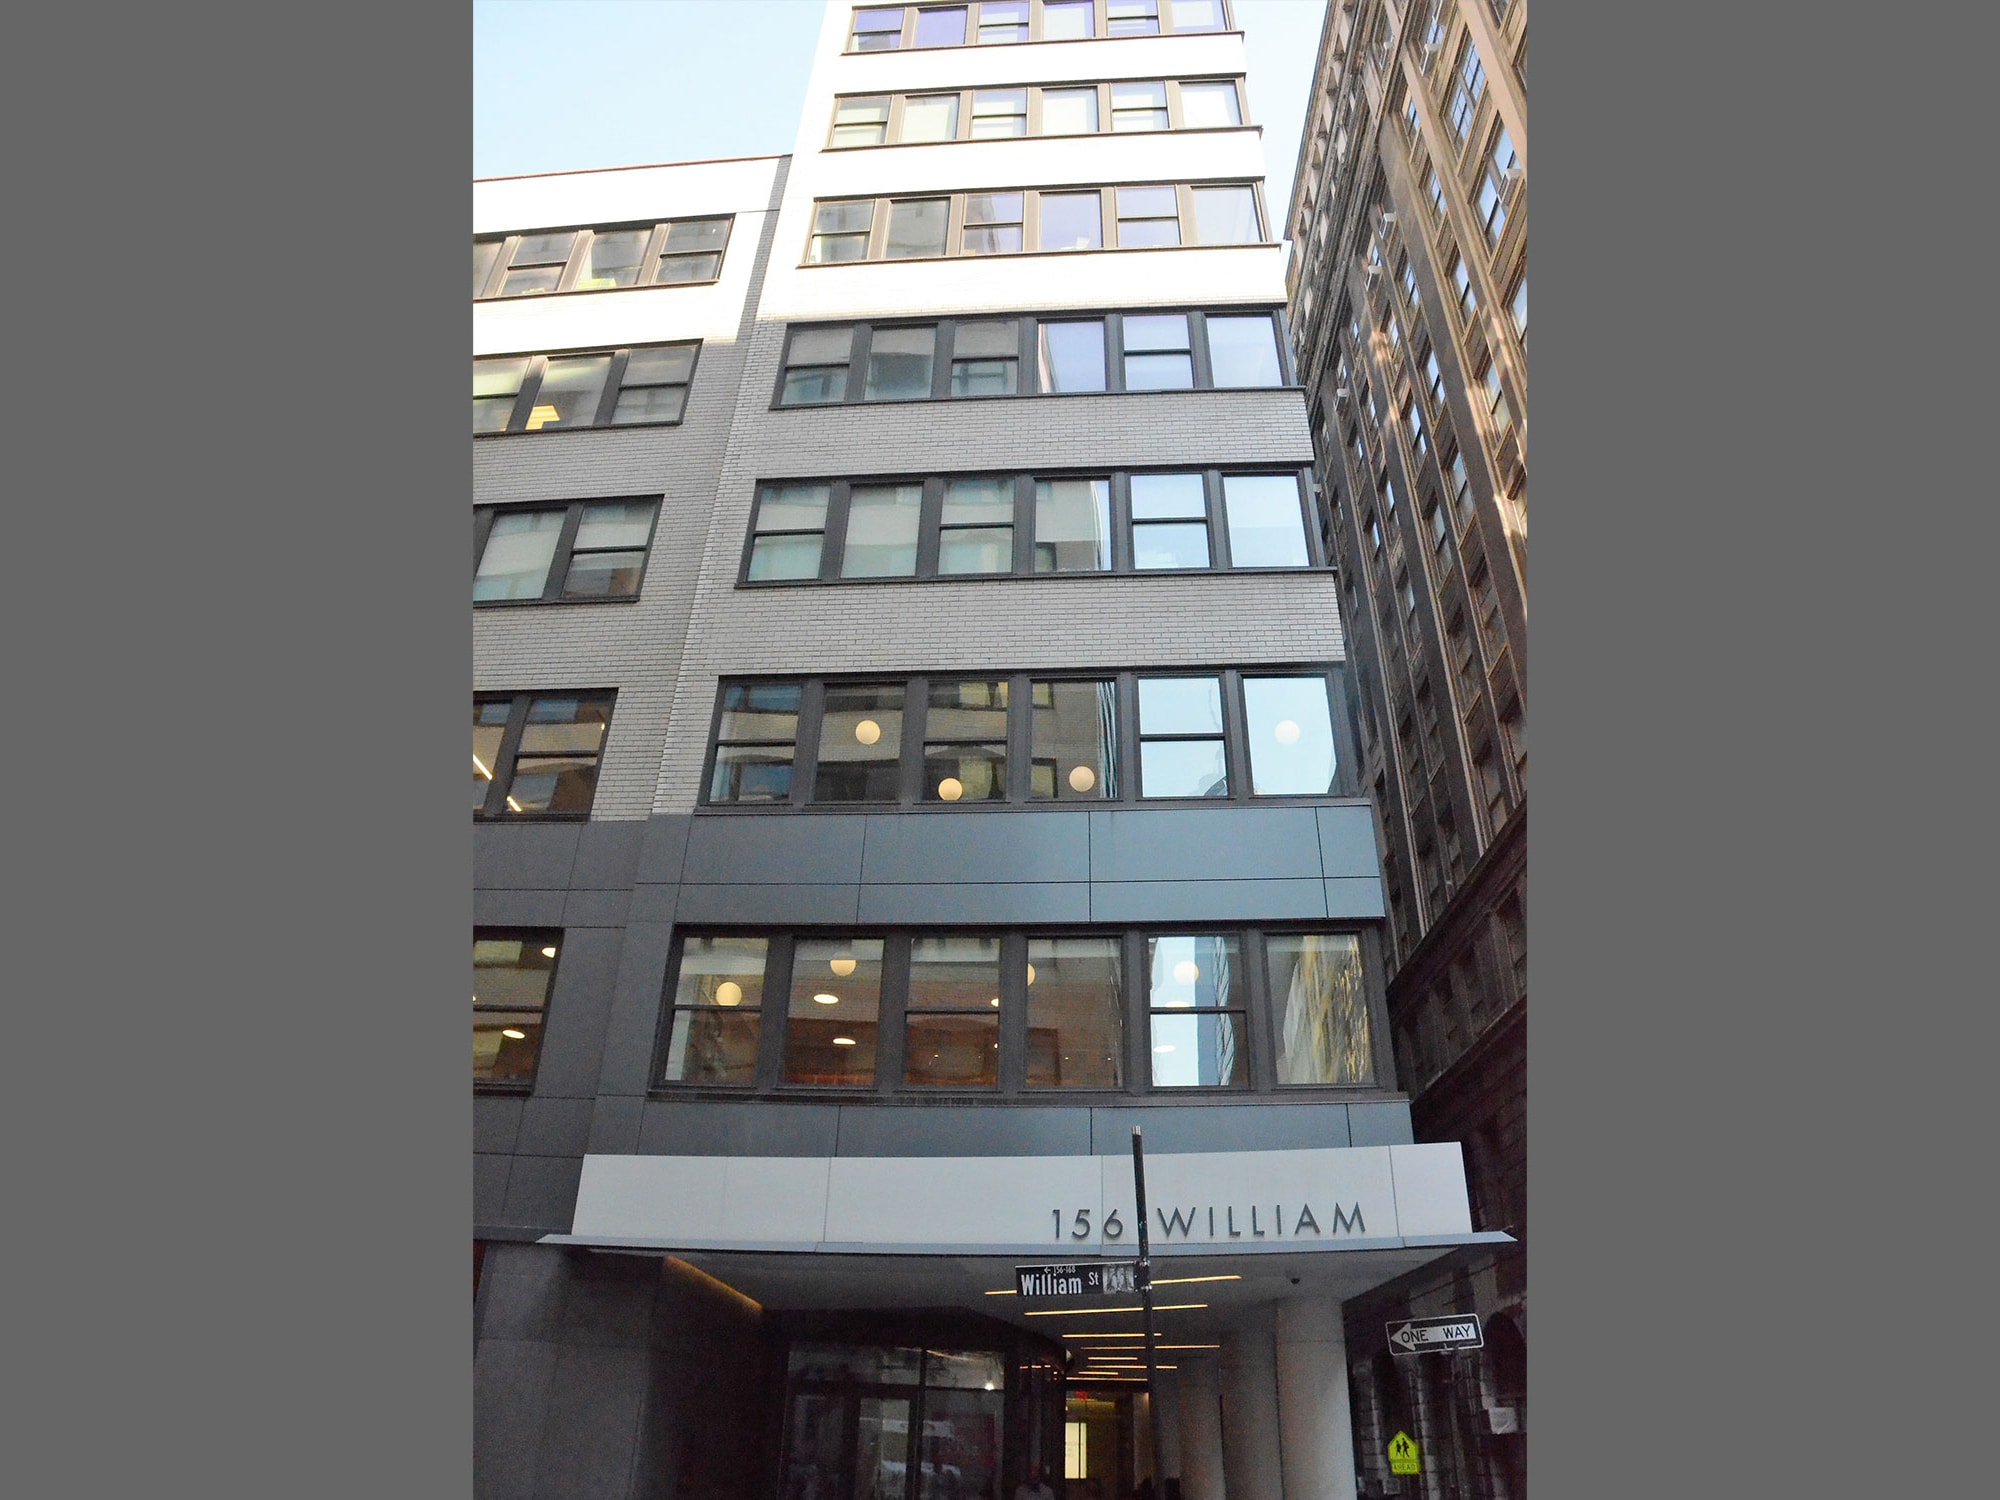 Exterior of the William Street Clinic building in Manhattan.